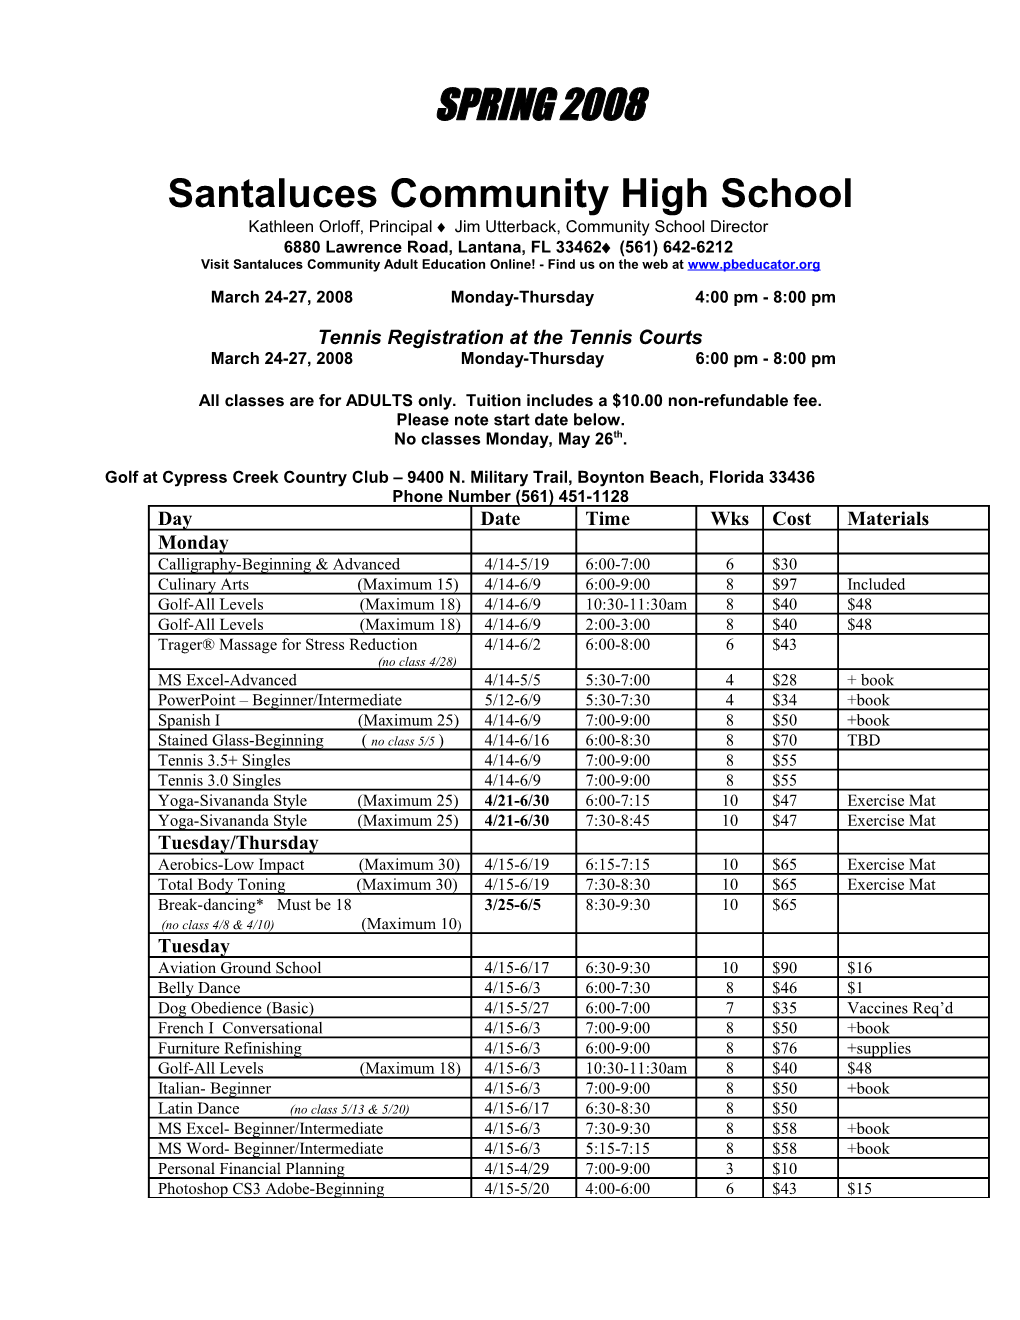 Santaluces Community High School